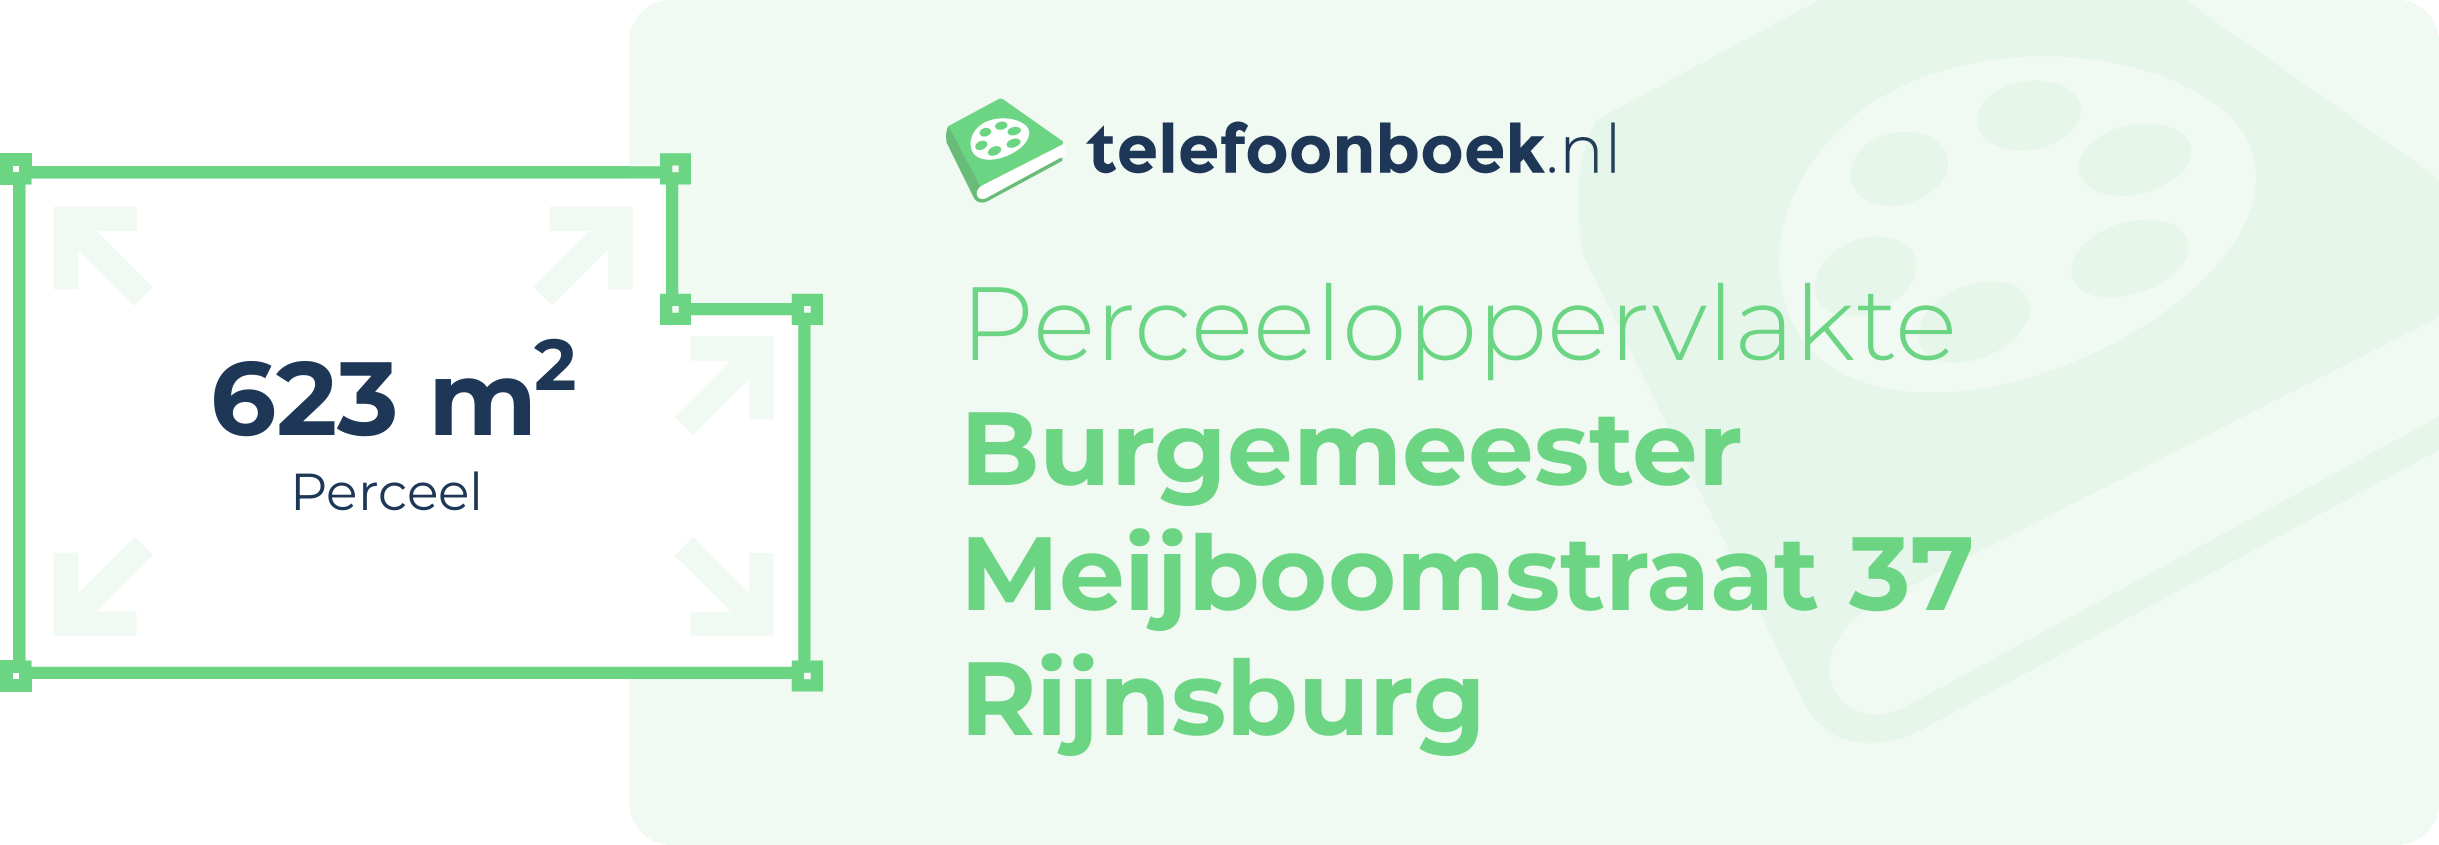 Perceeloppervlakte Burgemeester Meijboomstraat 37 Rijnsburg